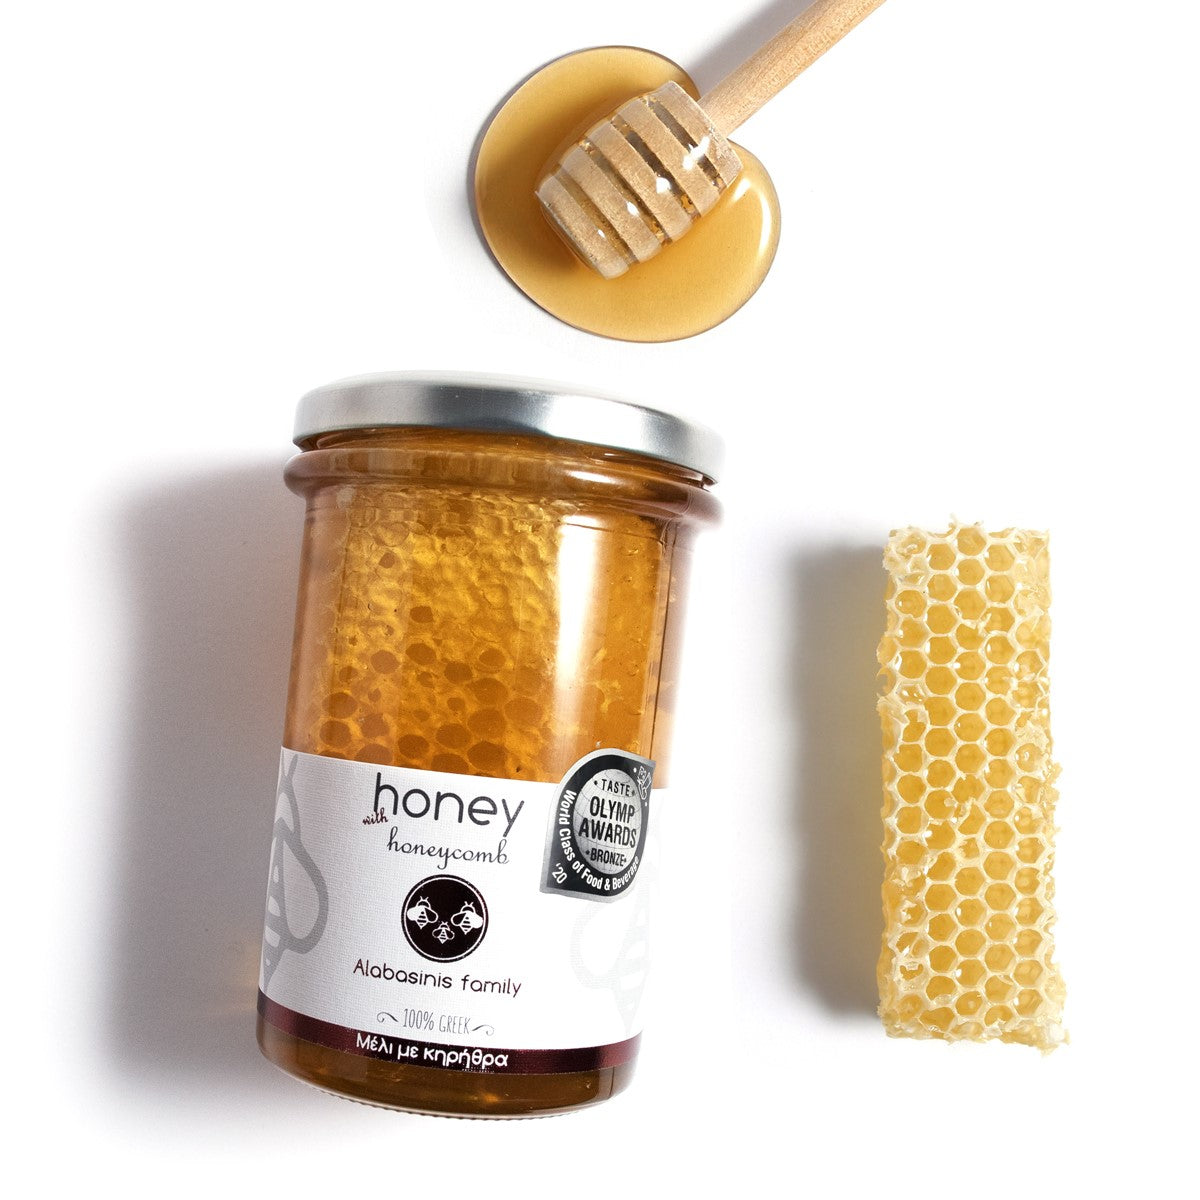 Alabasinis Bee Farm Greek Honeycomb with Honey In a Jar